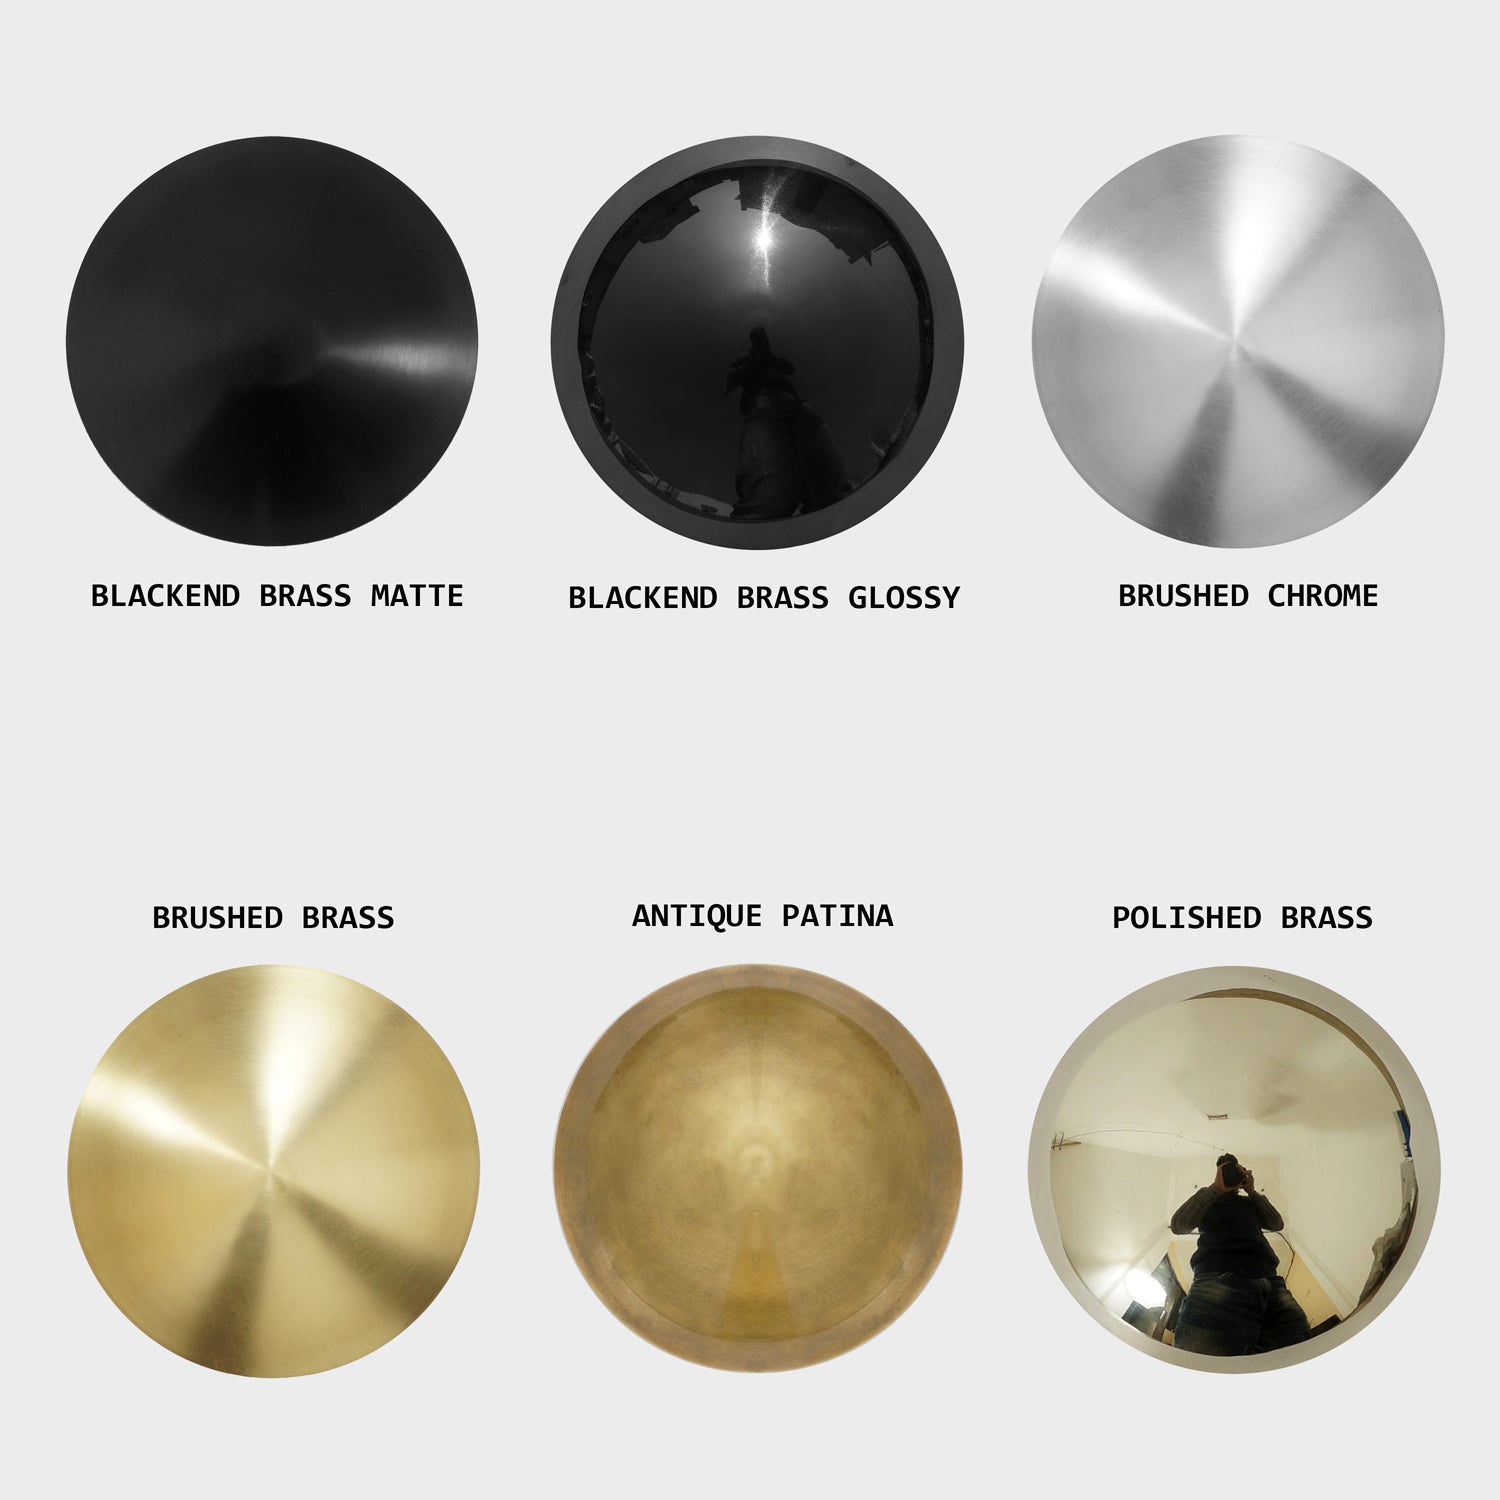 Half Urchin Modern Brass Sputnik Chandelier - Doozie Light Studio